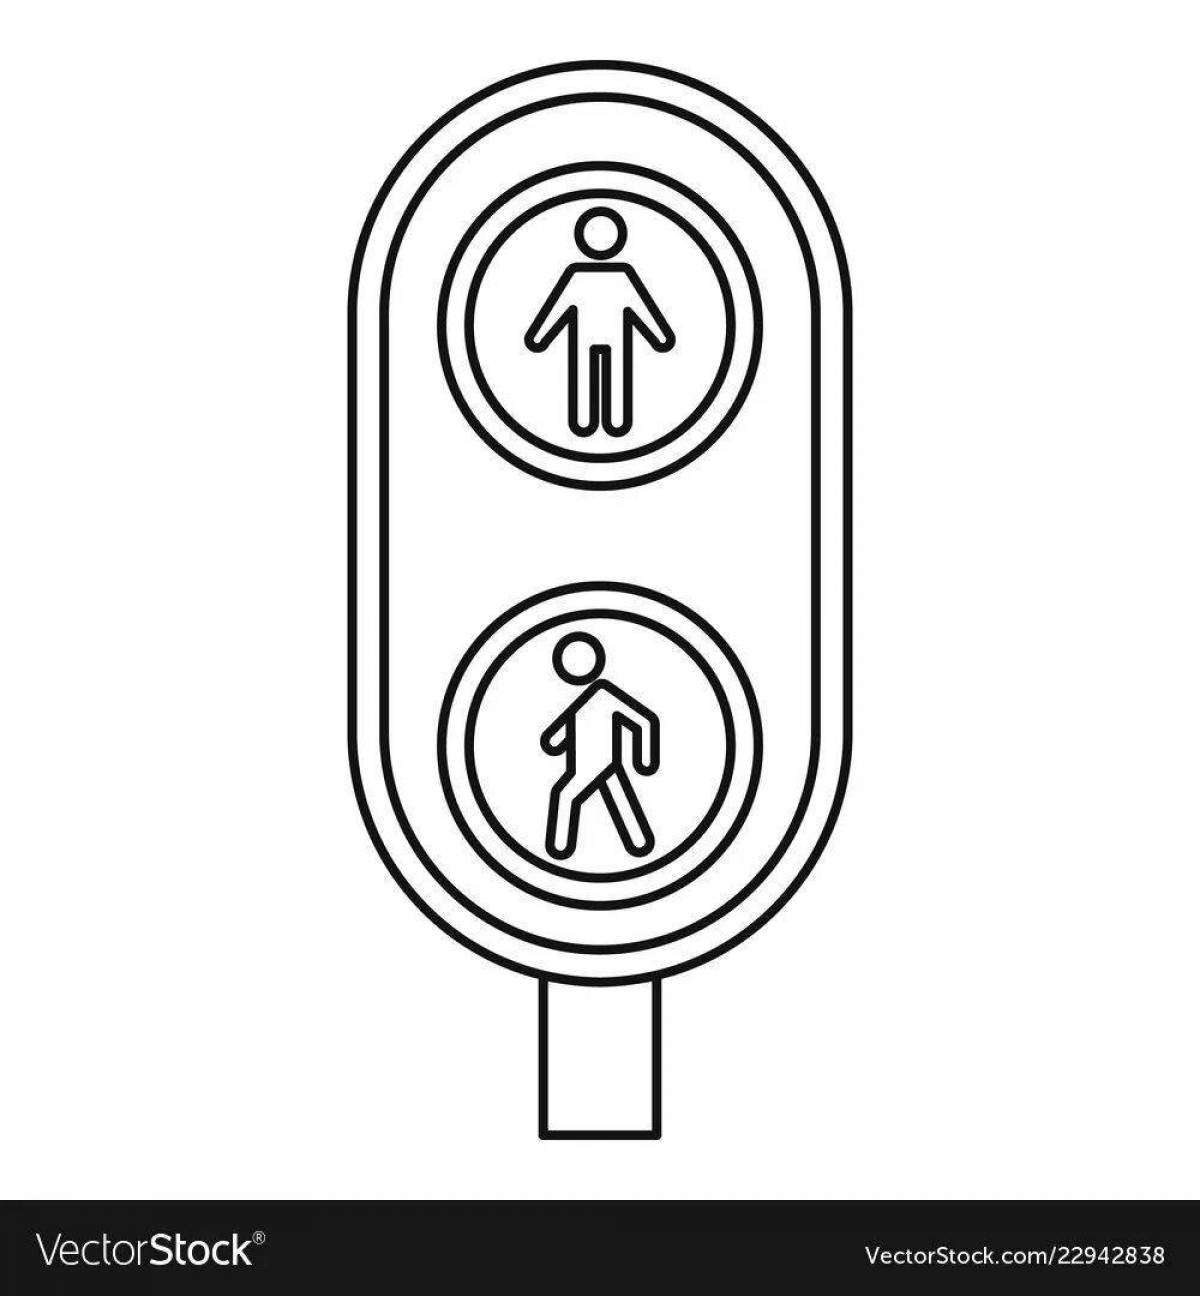 A fascinating pedestrian traffic light